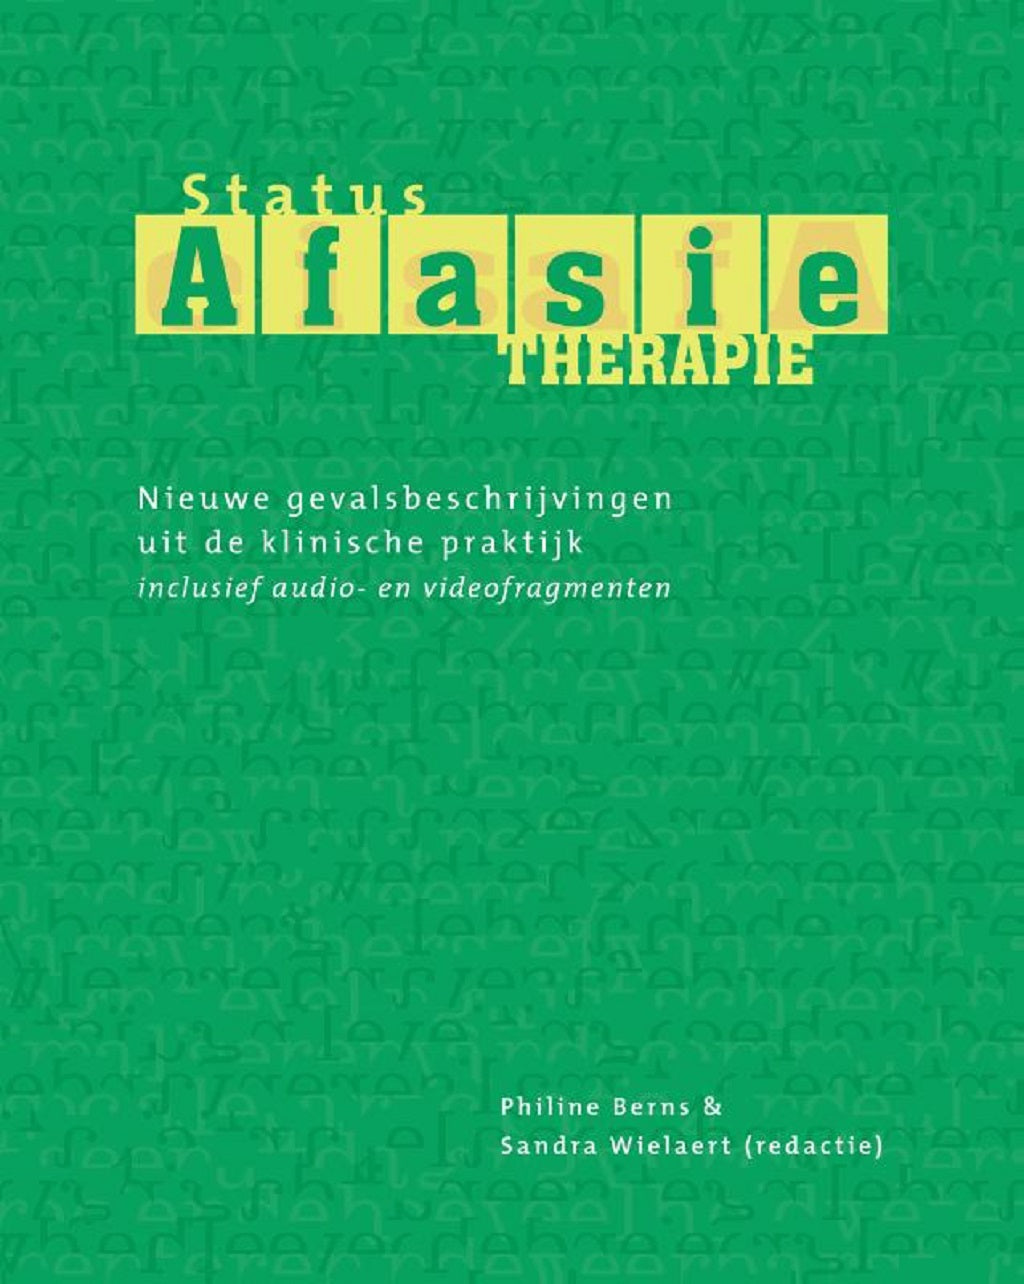 Status afasietherapie, 1e herziene editie